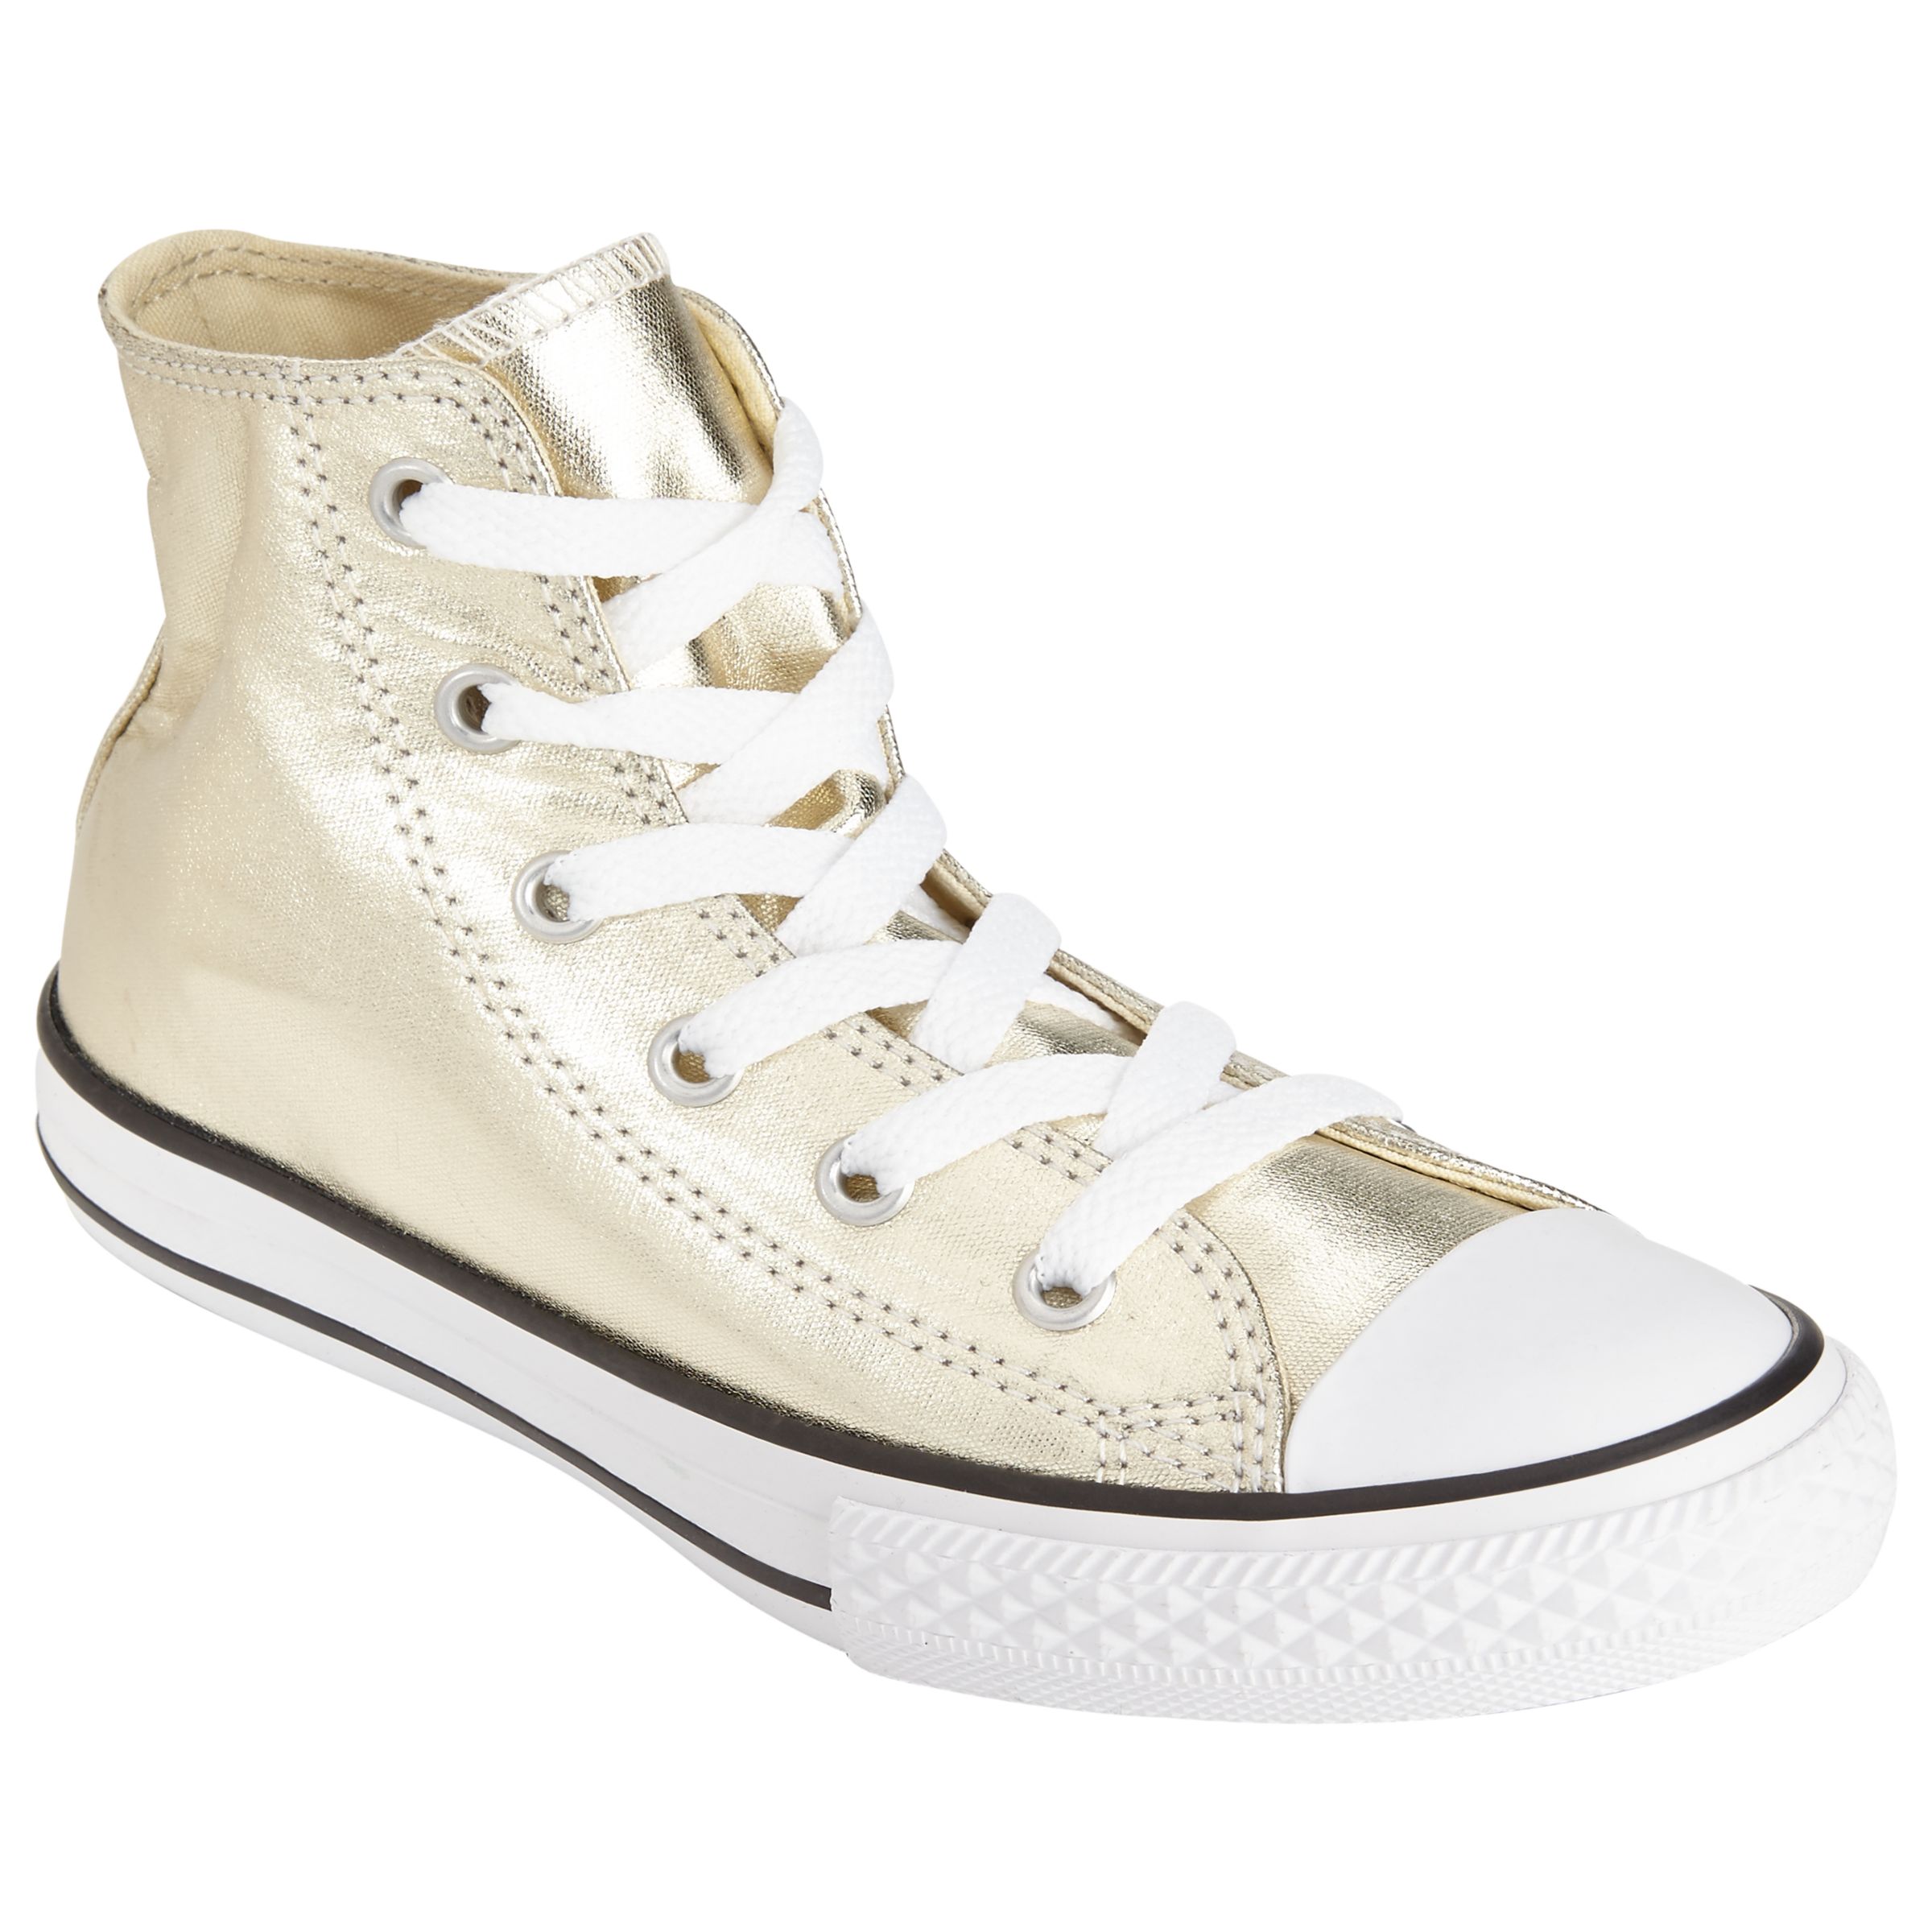 Converse Children's Hi Top Chuck Taylor Metallic Shoes, Light Gold, 1